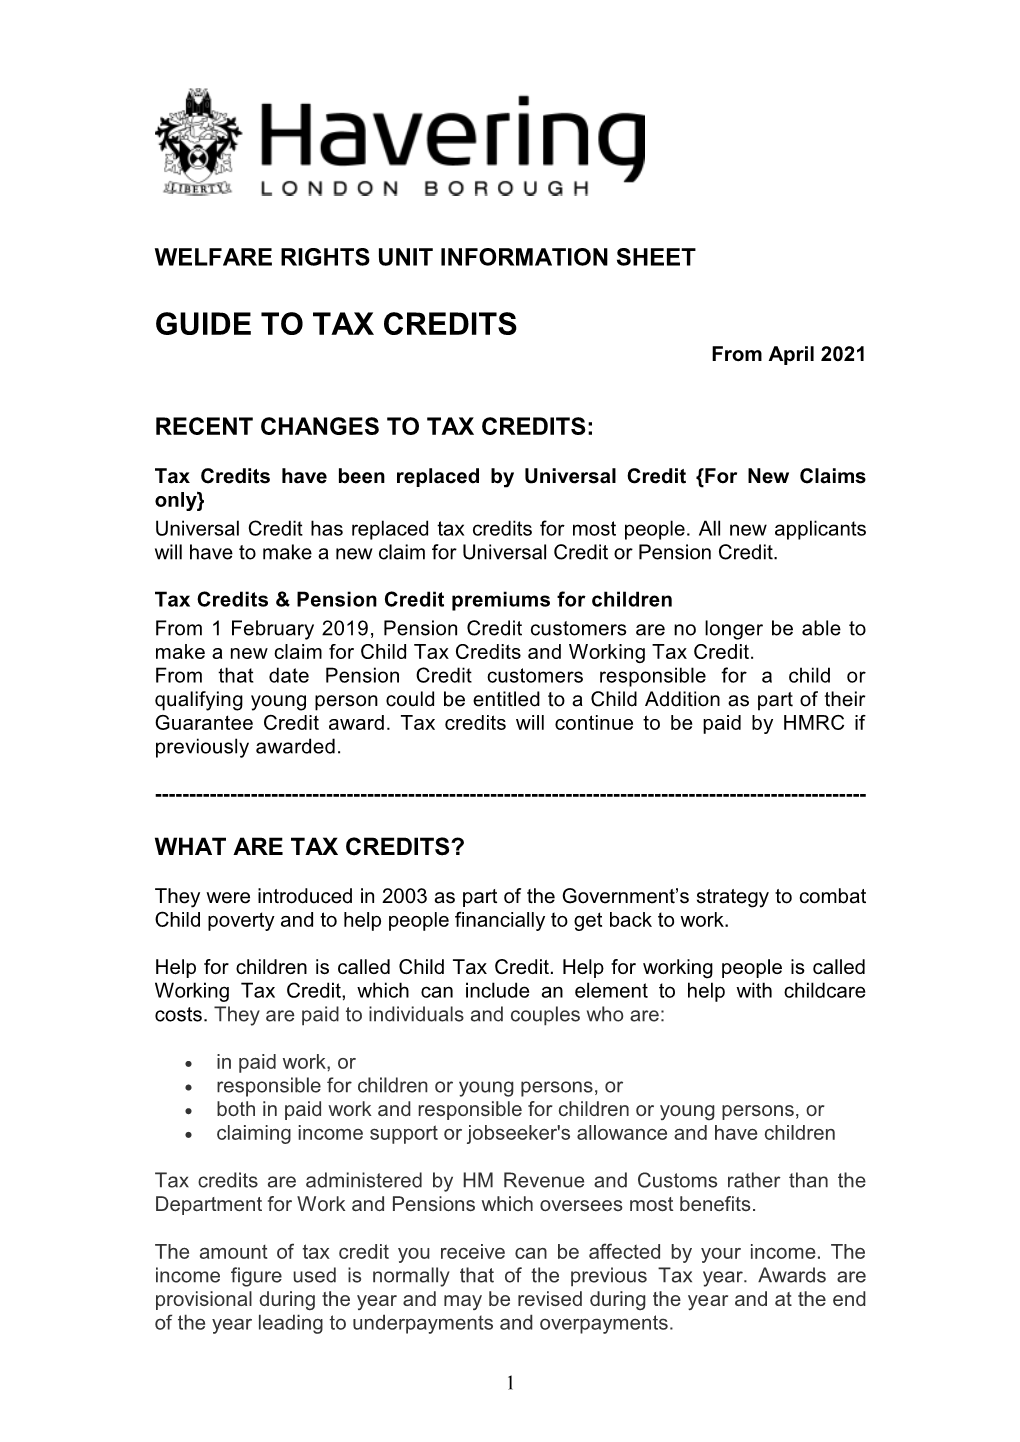 Download Tax Credits